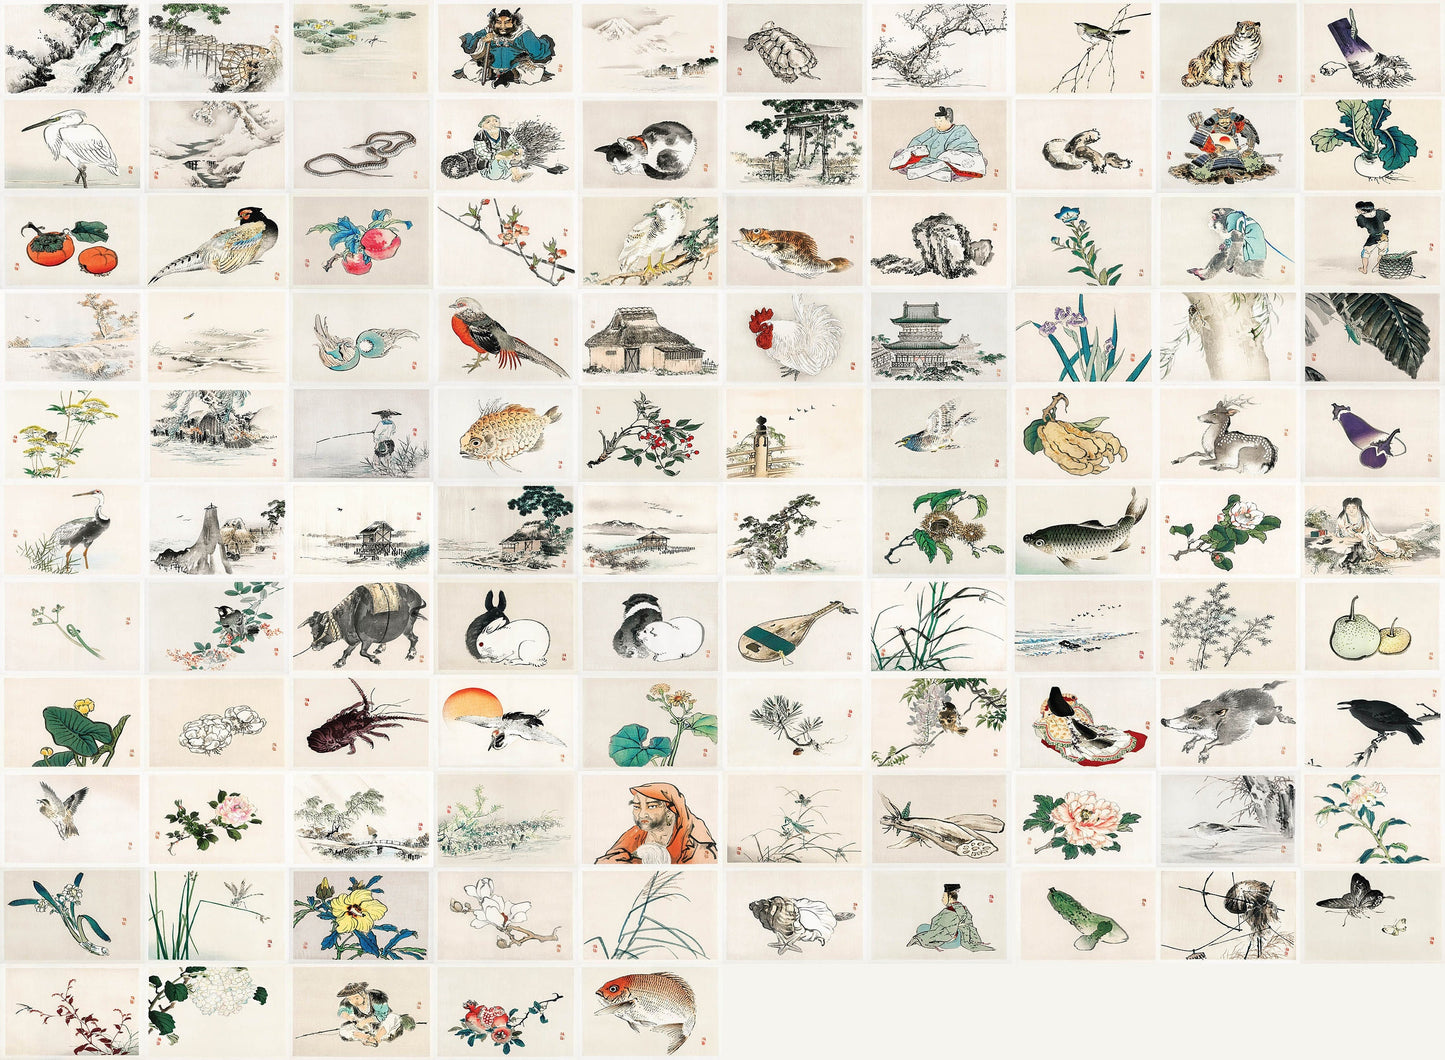 Gakan Japanese Ukiyo-e Woodblock Print 4"x6" Collage Kit Set 1 [105 Images]